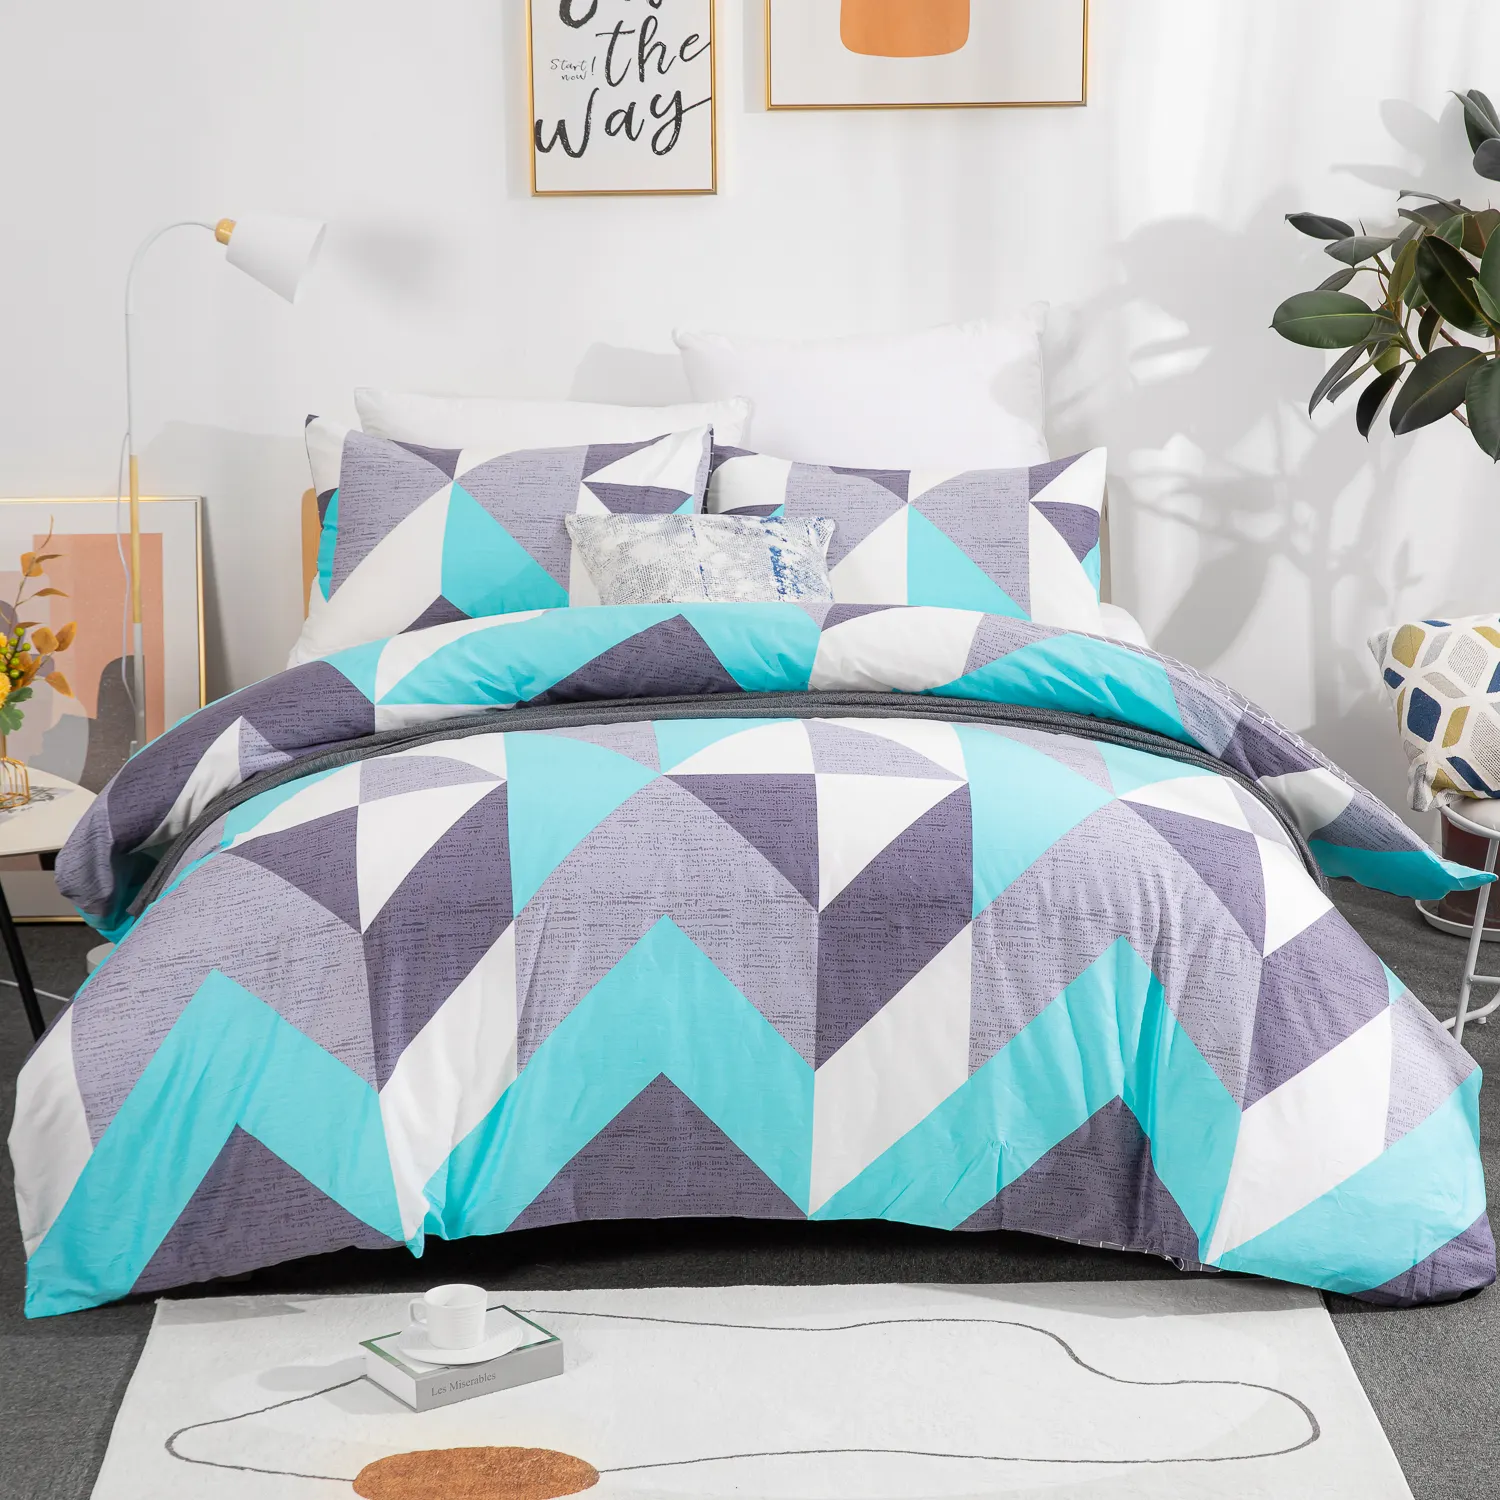 Großhandel Digitaldruck Bett bezug Sets Polyester Mikro faser Bett bezug Bettwäsche Set Mit Geometrischem Muster